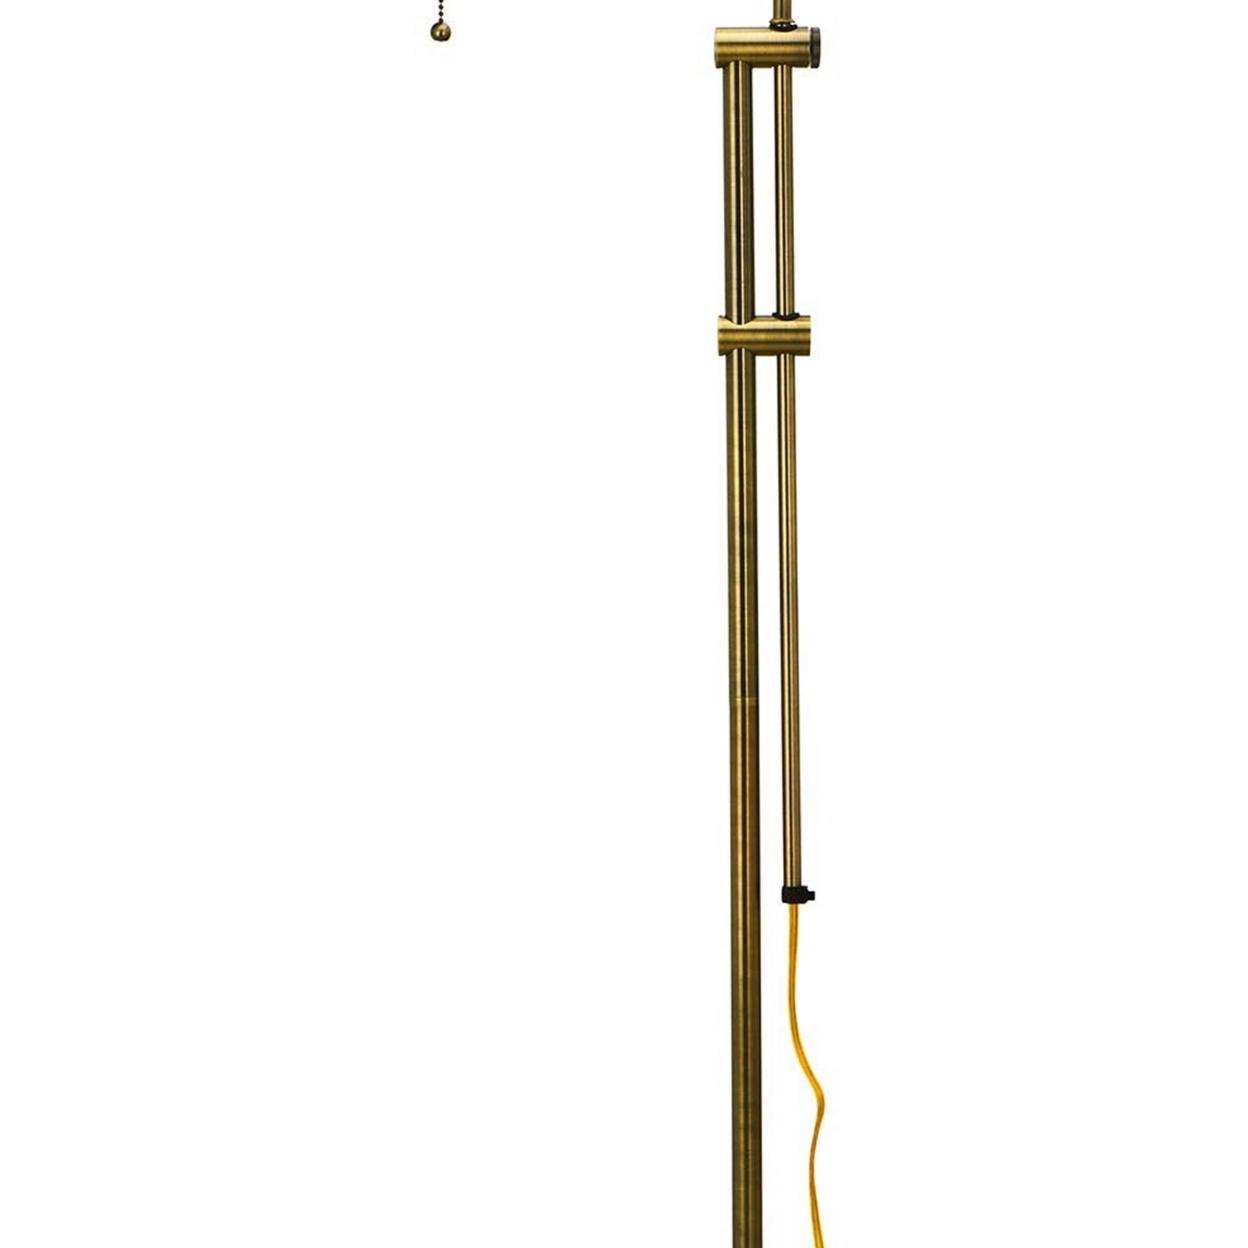 Metal Rectangular Floor Lamp With Adjustable Pole, Gold- Saltoro Sherpi